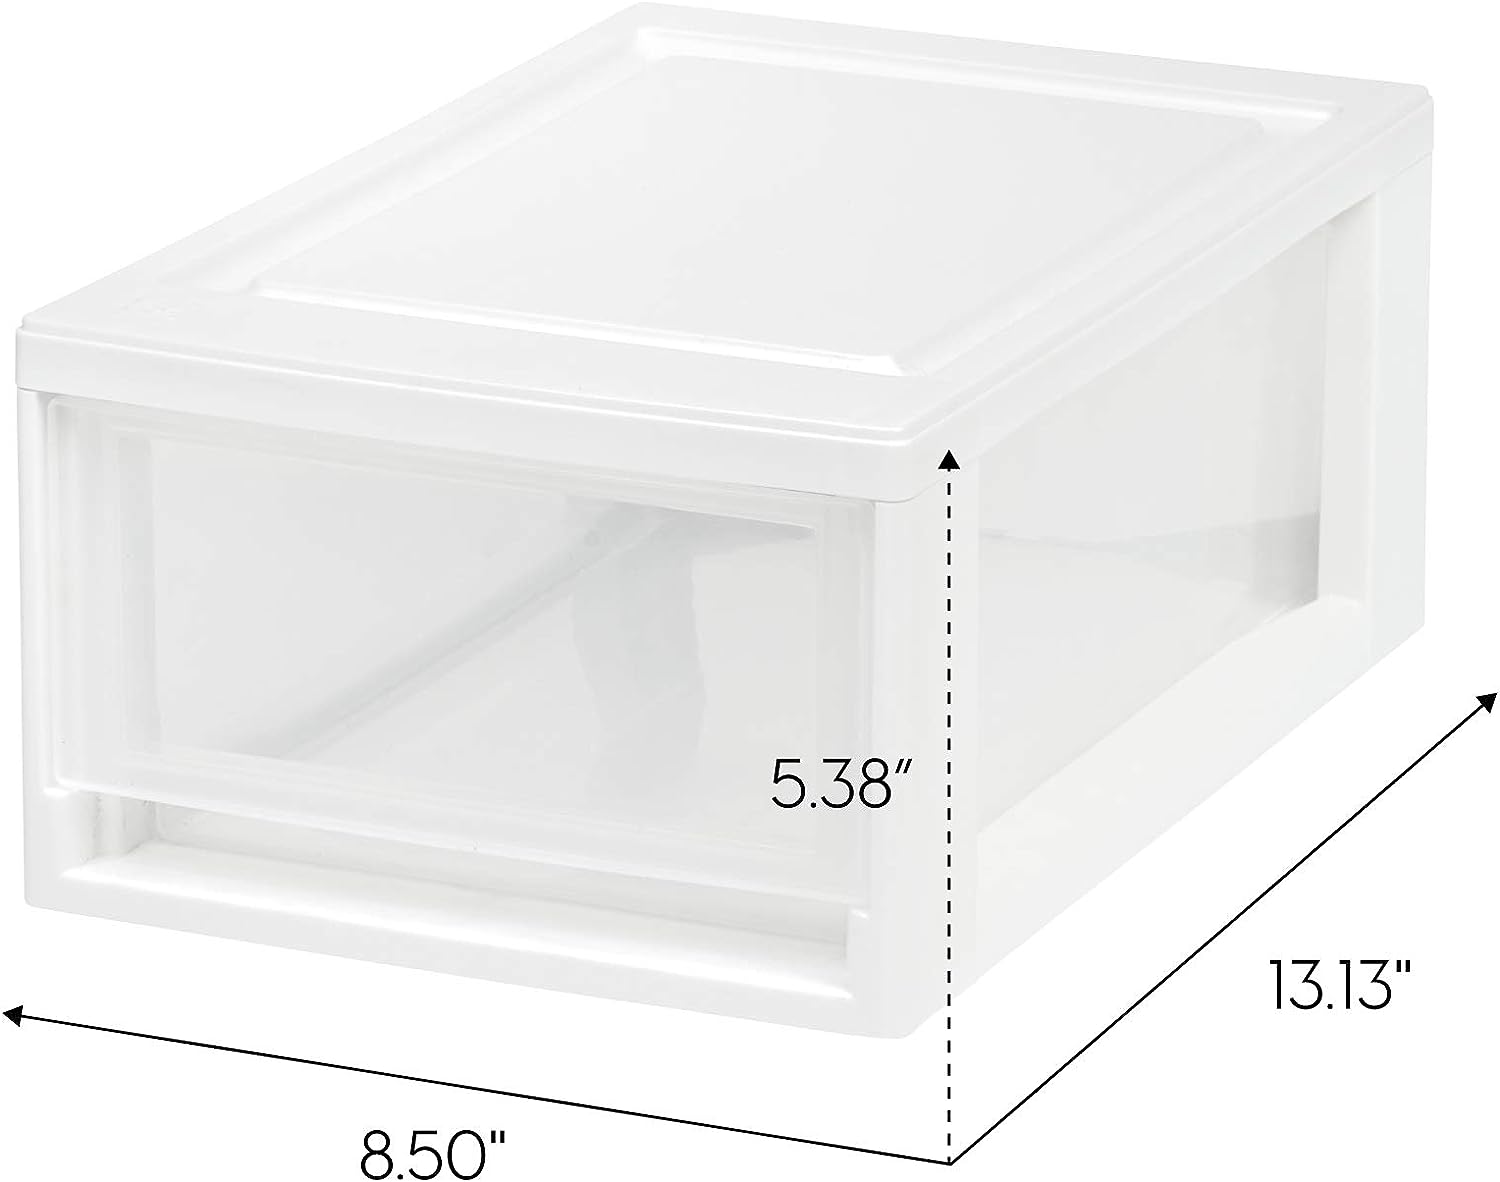 6 PCS Fridge Storage Bins - Stackable Plastic Drawers (White)